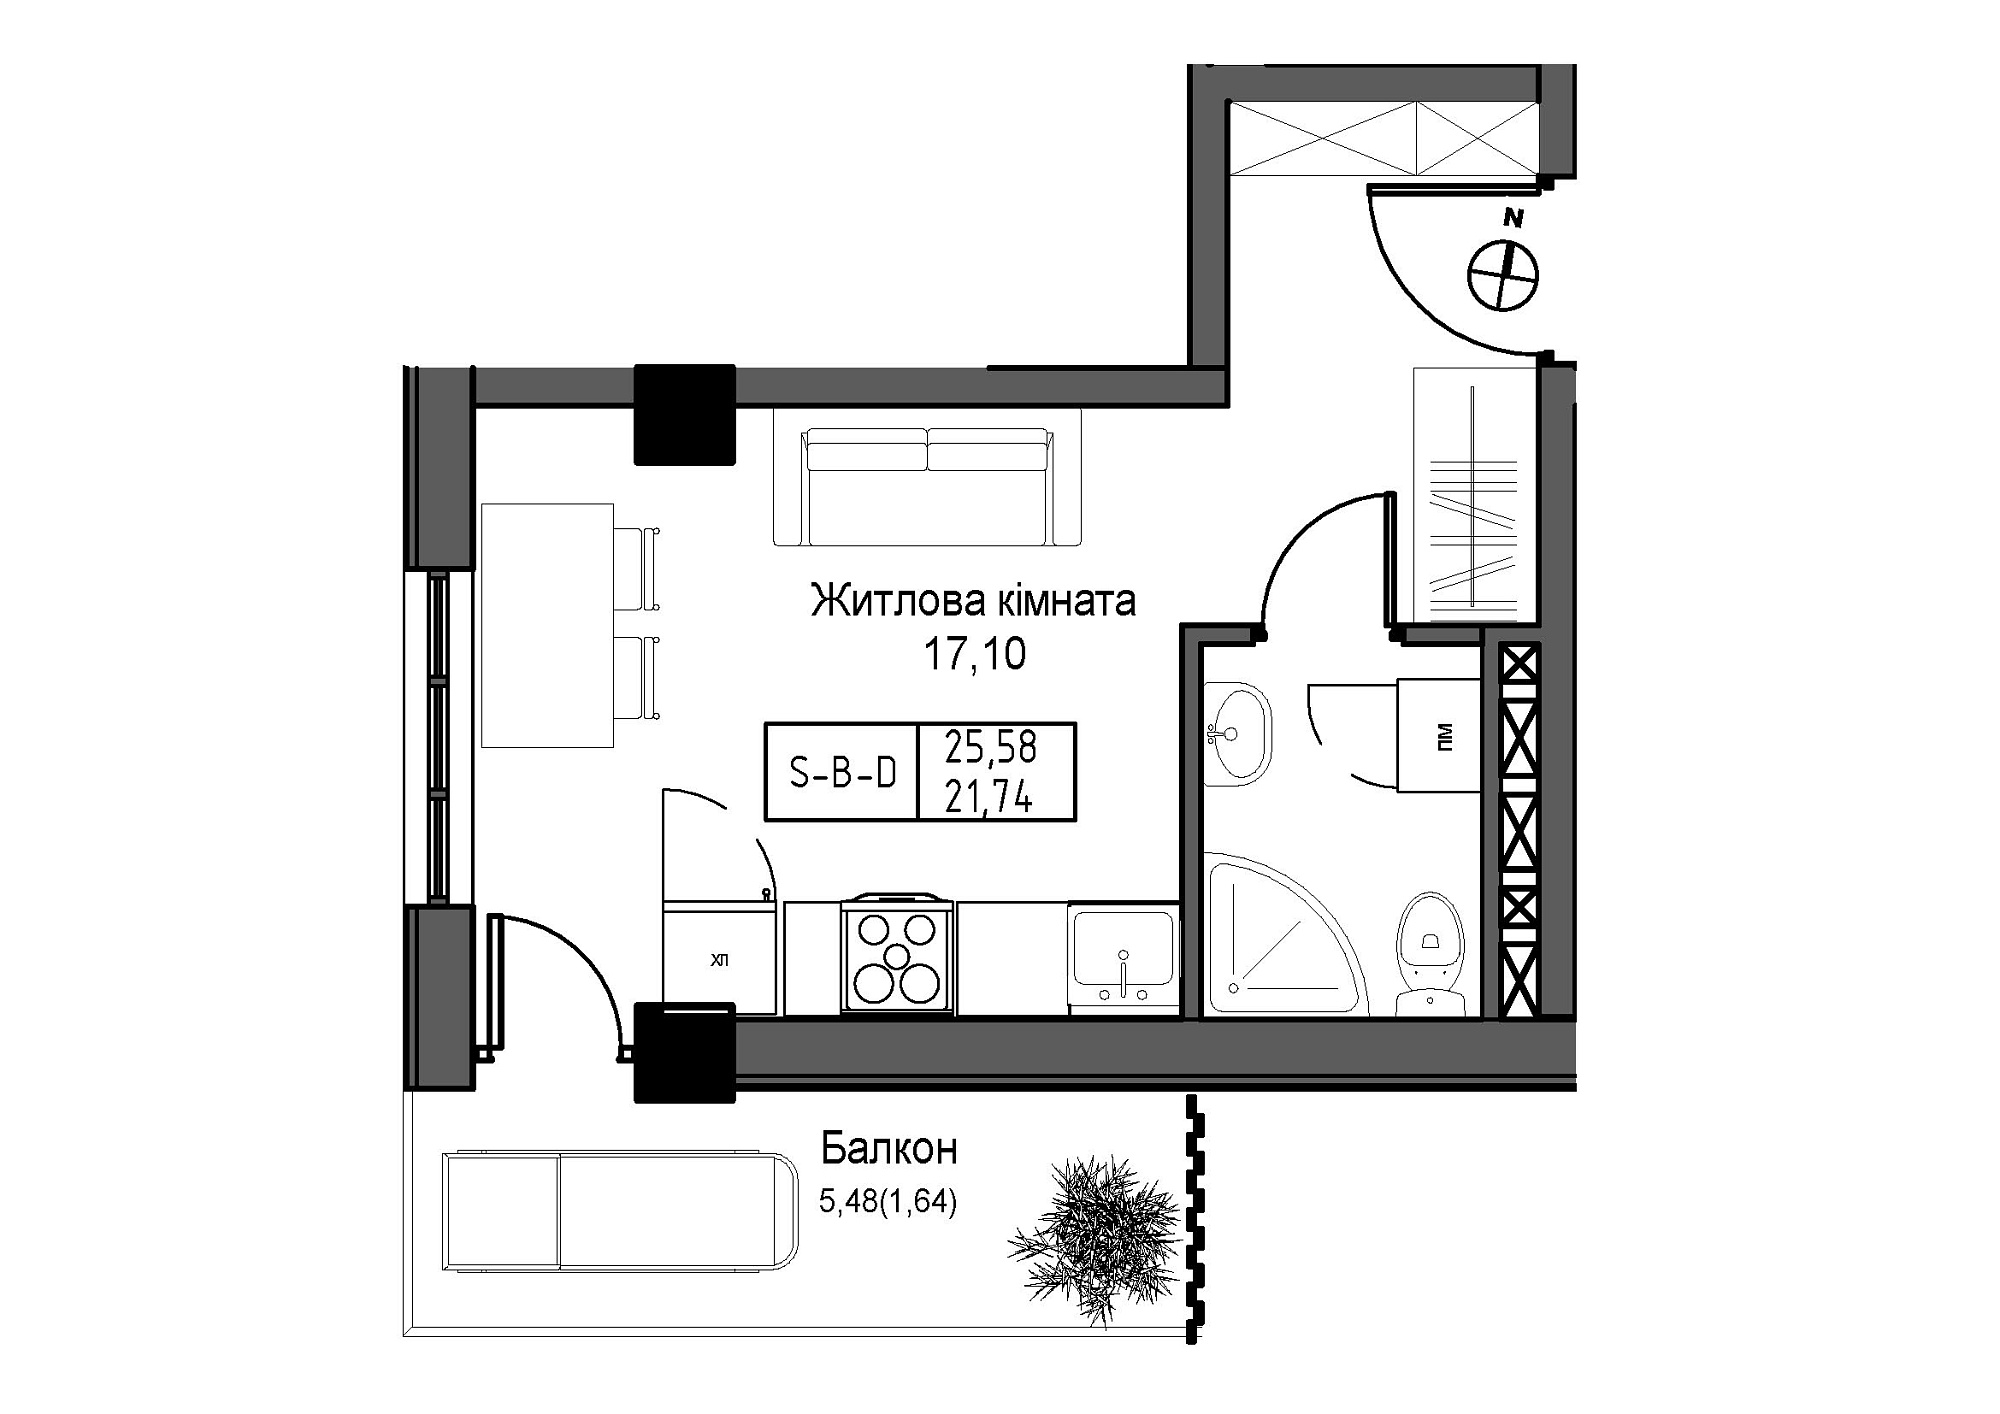 Планування Smart-квартира площею 21.74м2, UM-007-04/0010.